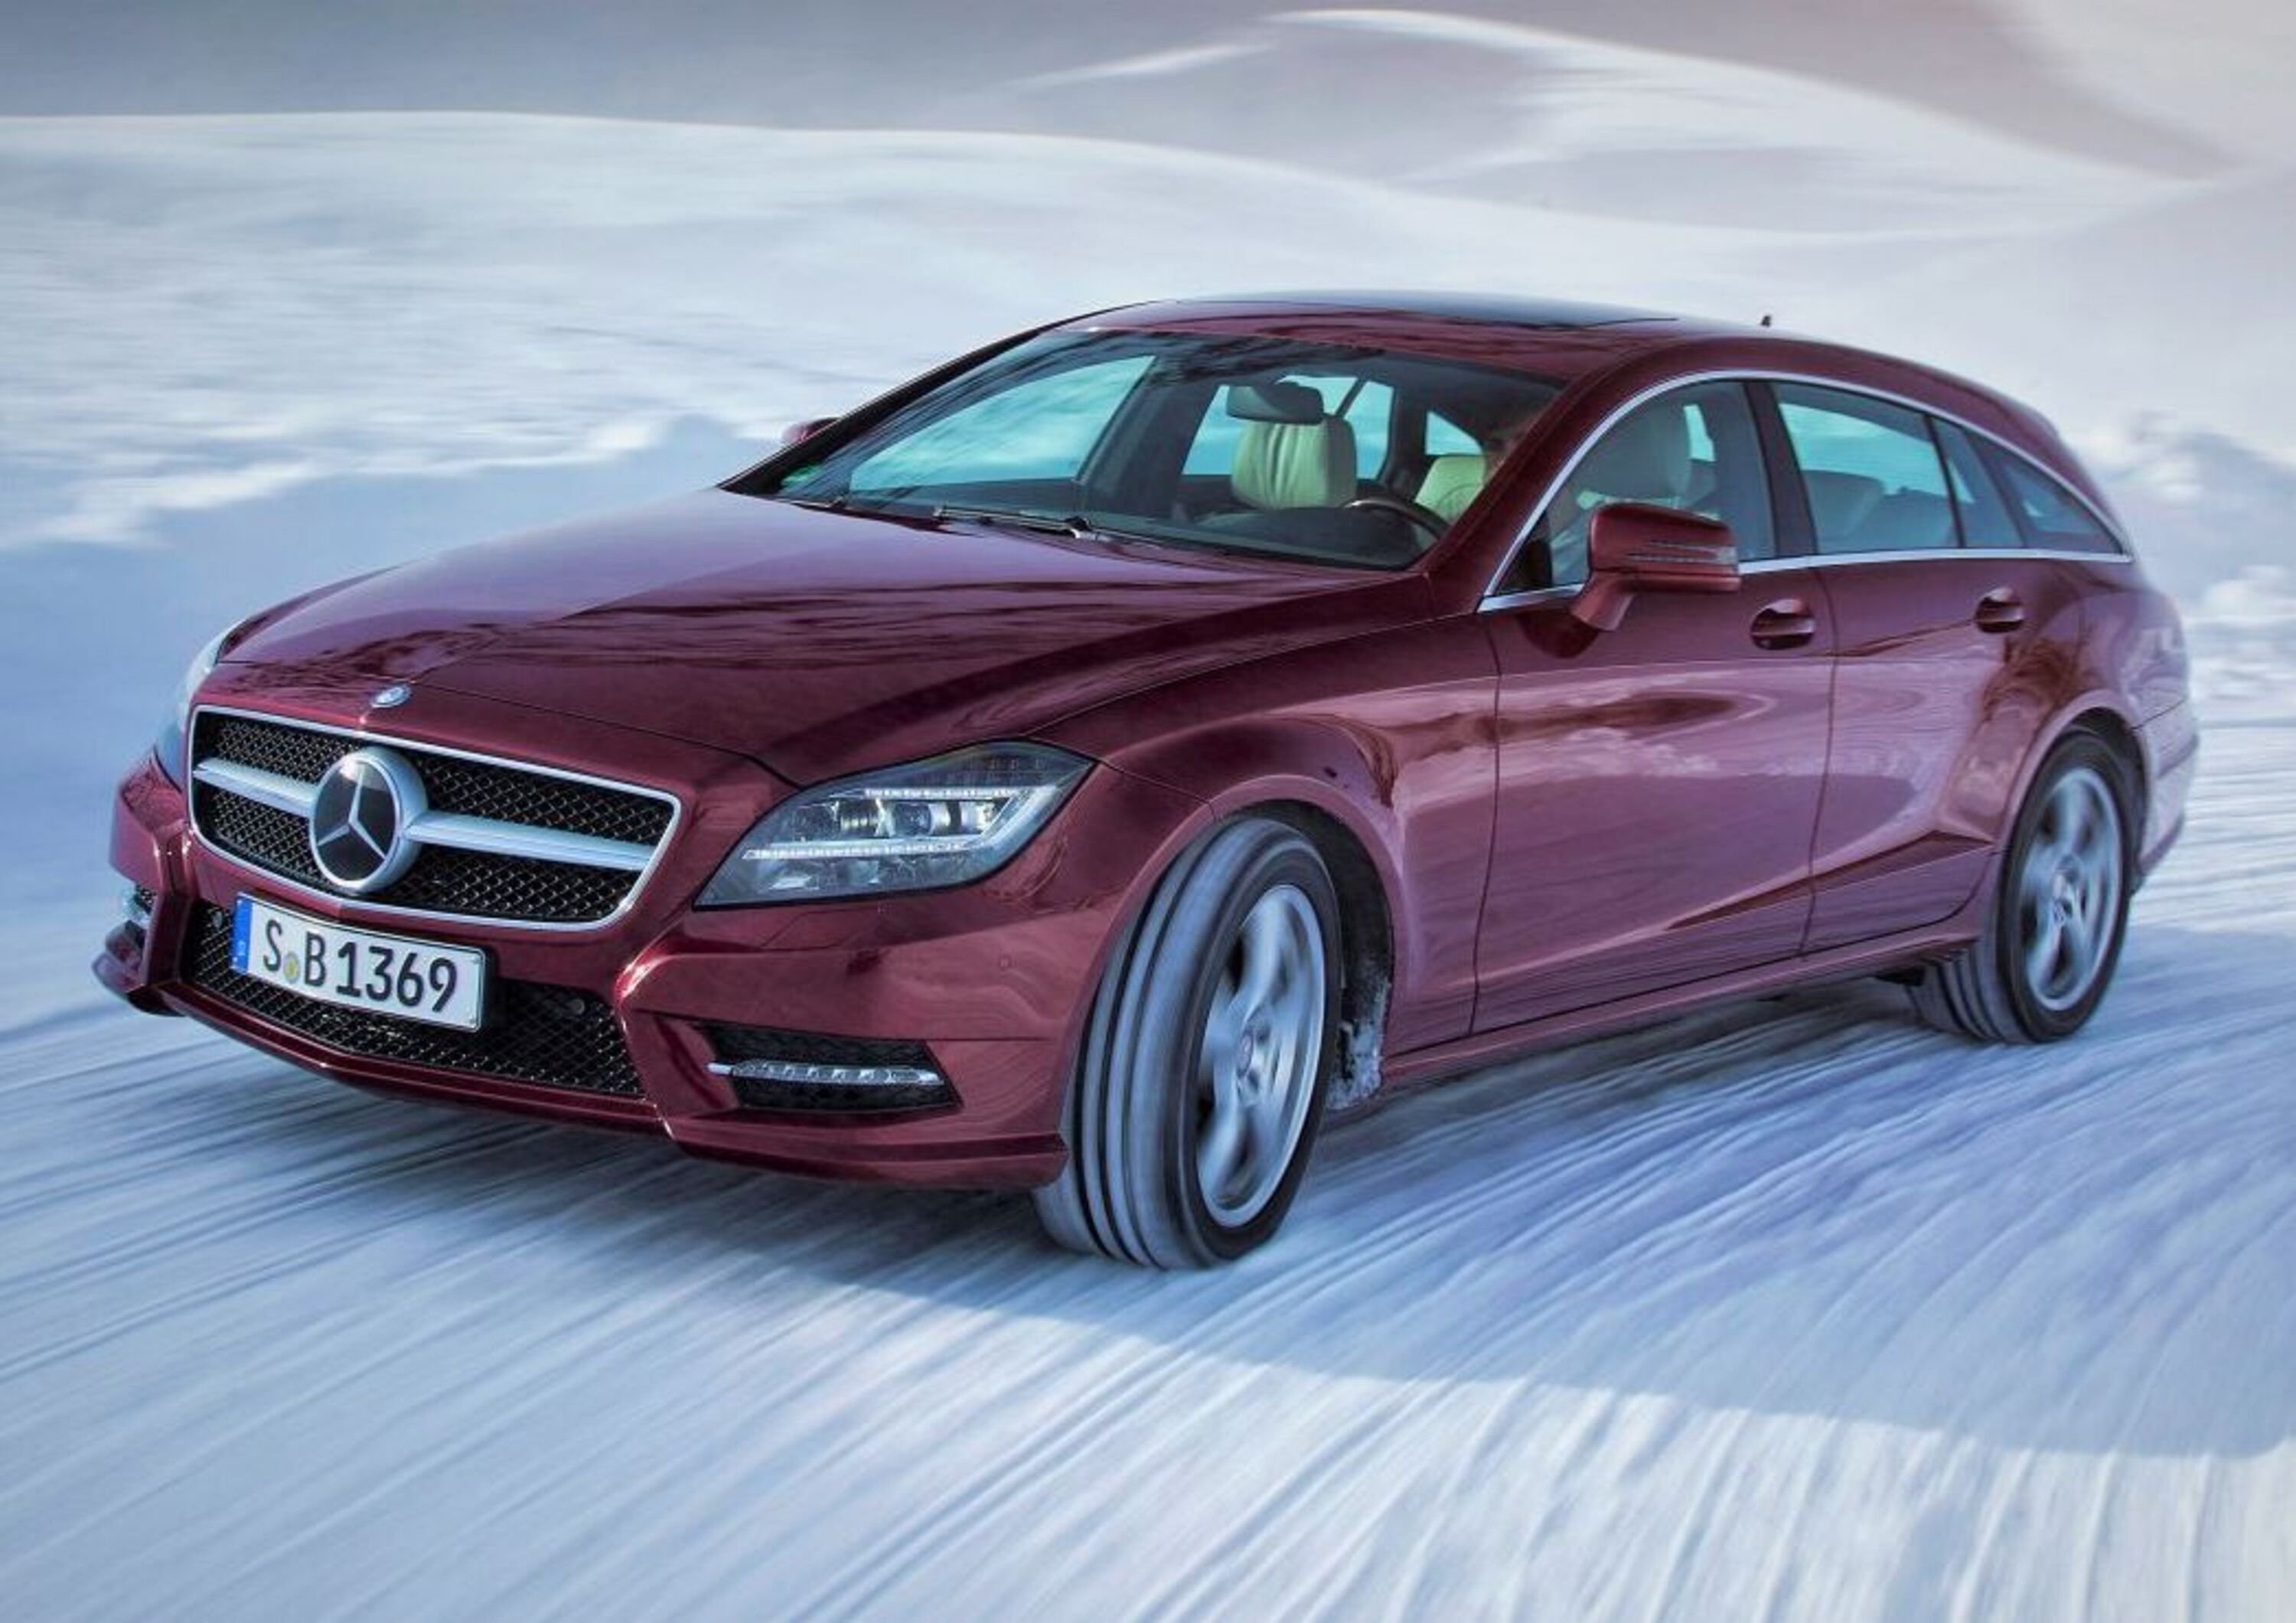 Avis Prestige: Mercedes 4Matic per un weekend sulla neve da VIP